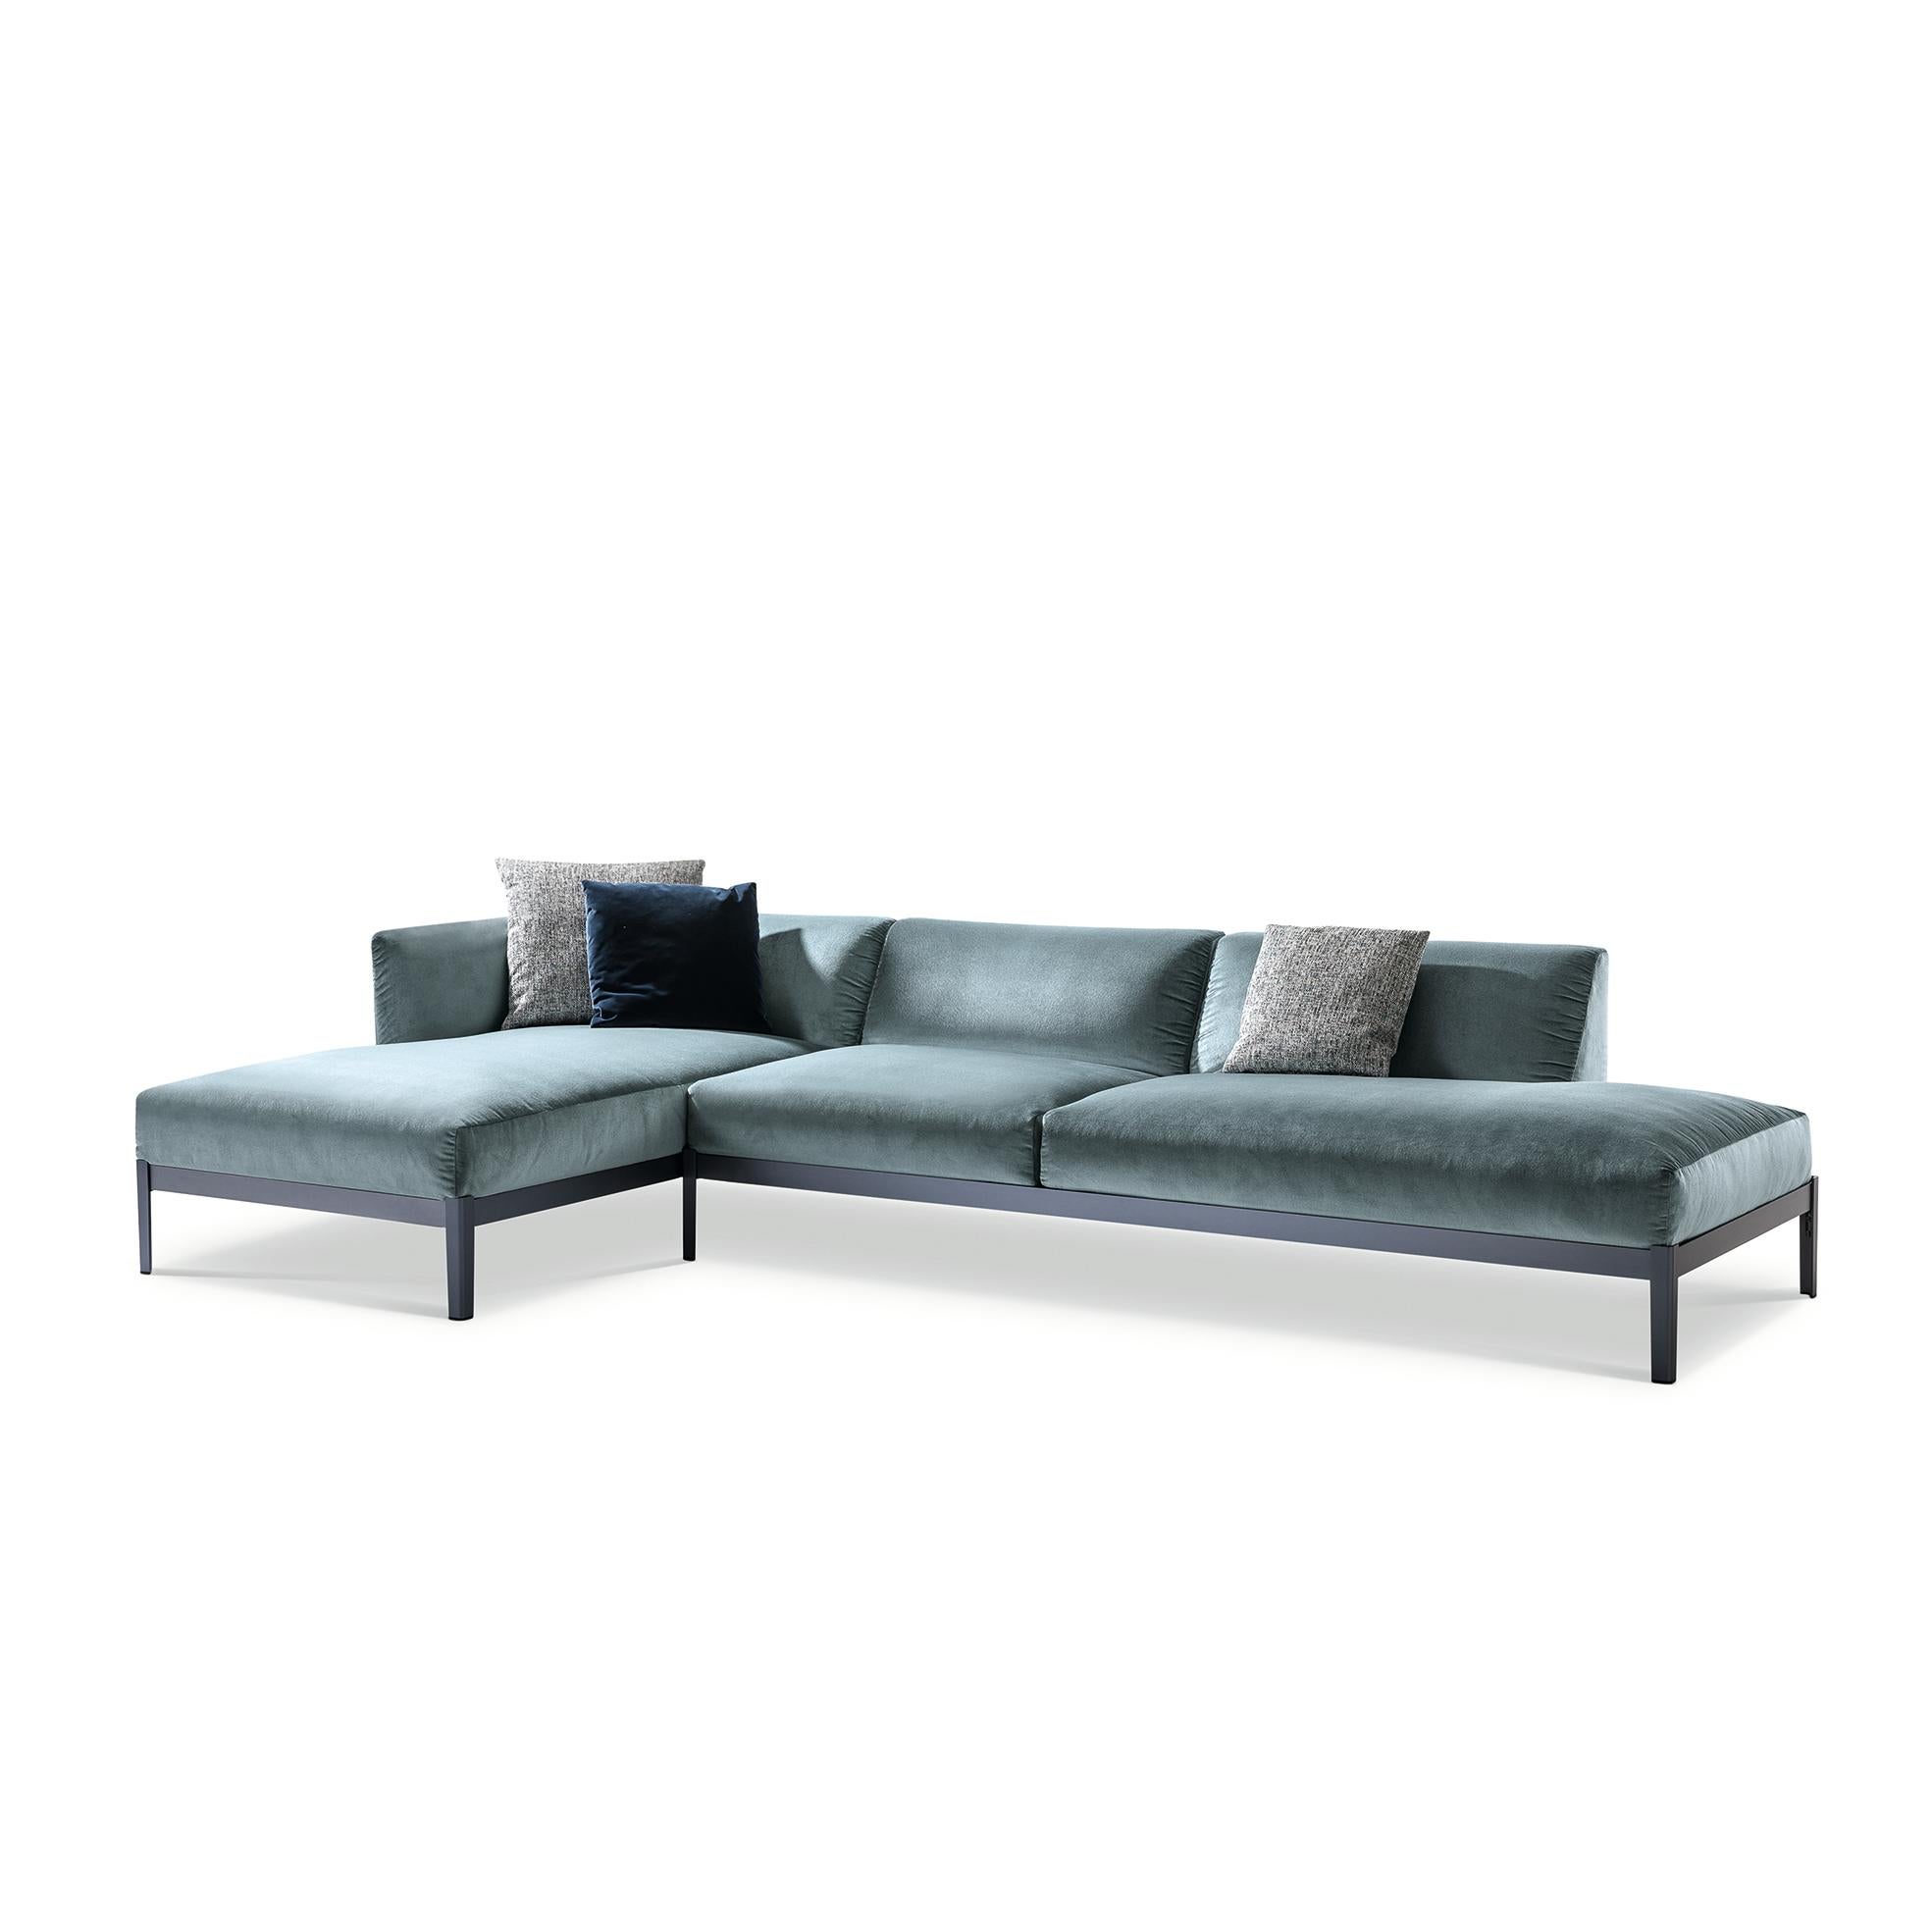 Italian Ronan & Erwan Bourroullec 'Cotone' Sofa, Aluminum and Fabric by Cassina For Sale